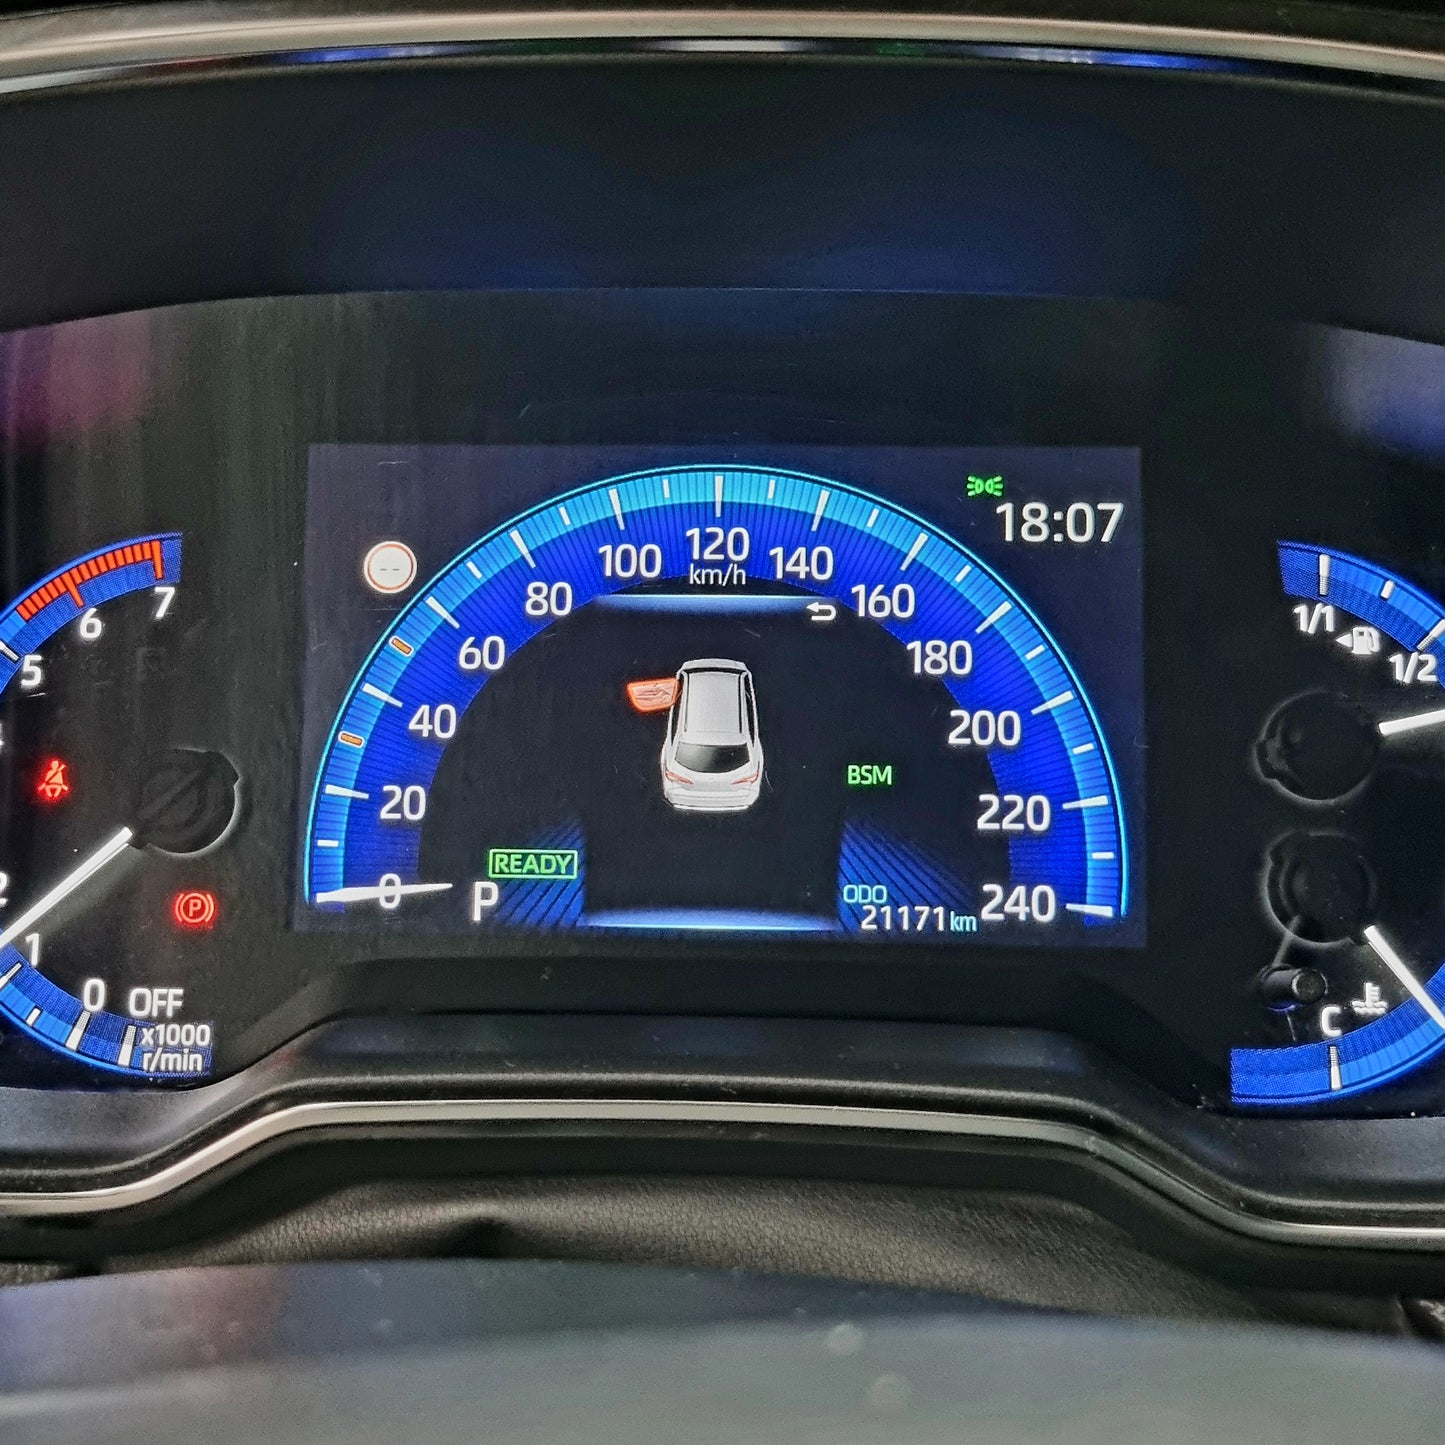 Toyota Corolla Hybride 1.8 05/2022 21.171km